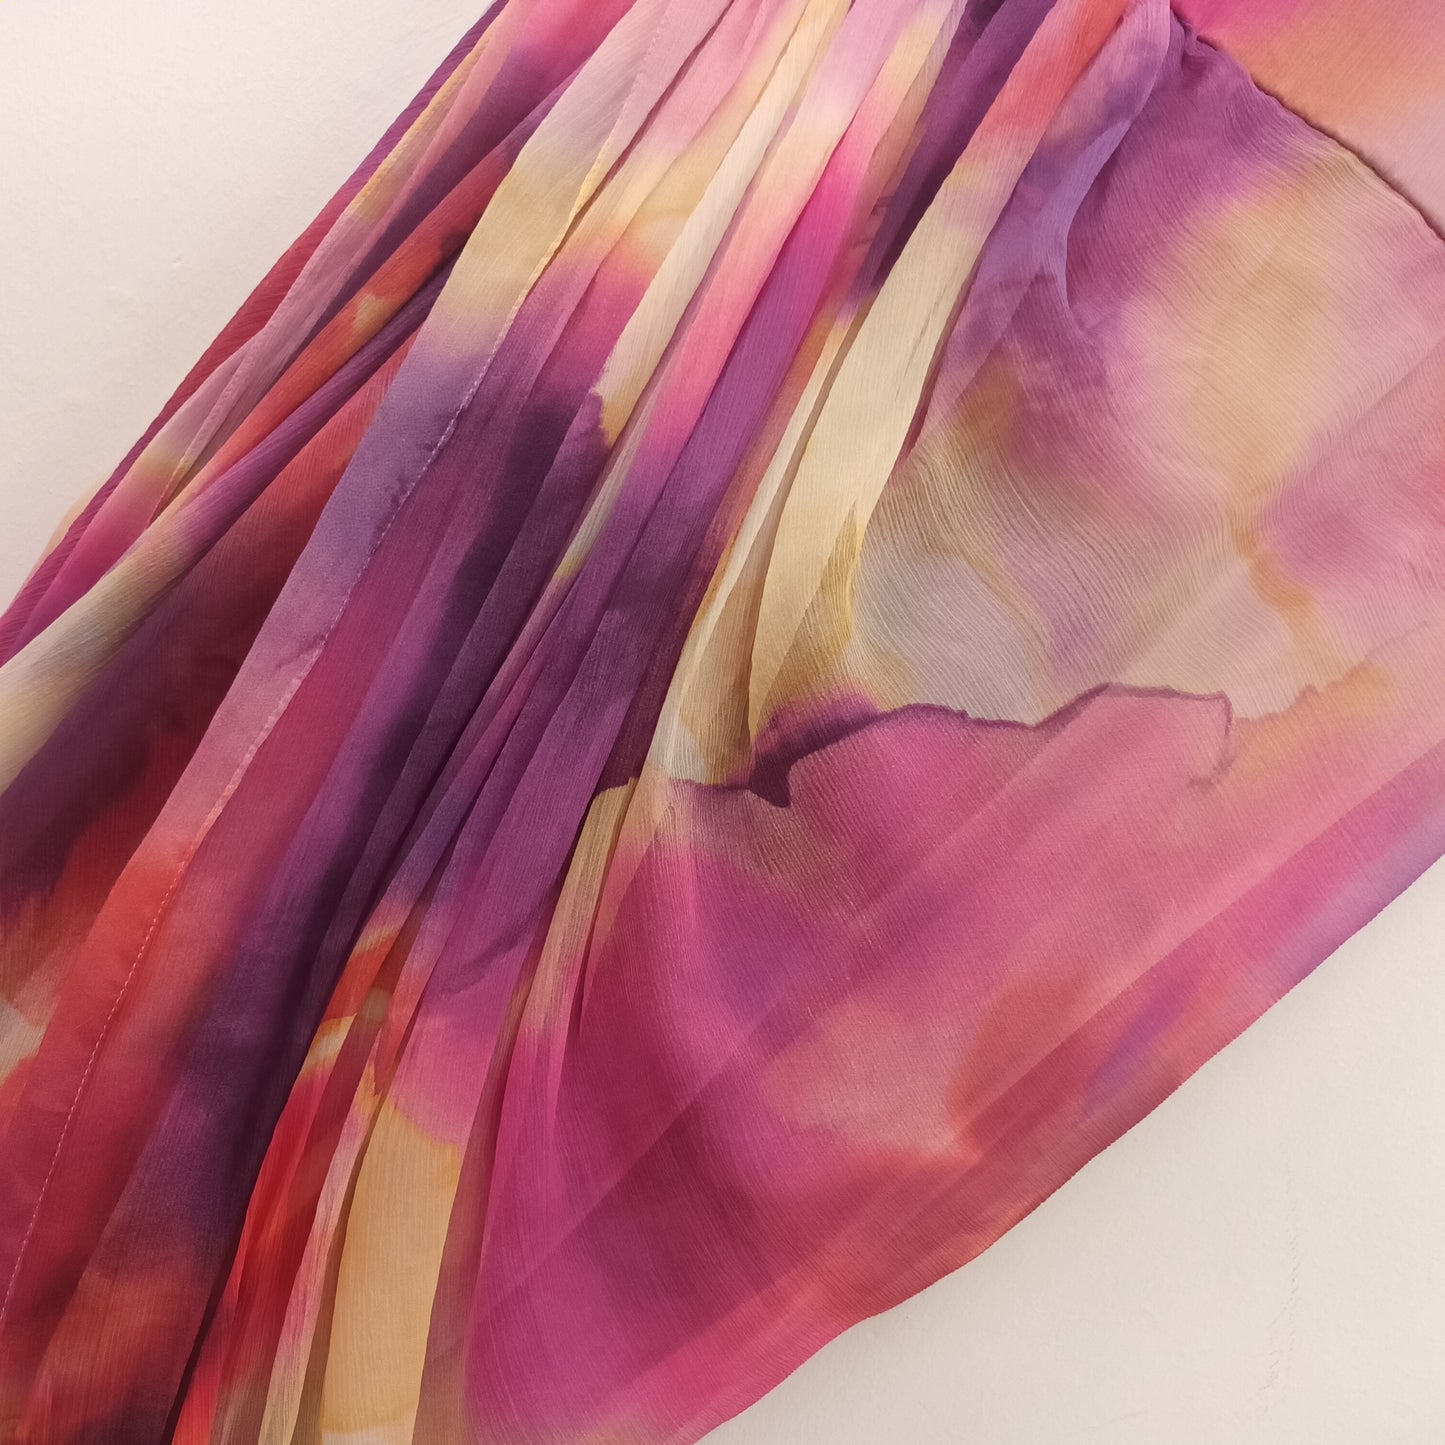 Per Una Spezial Size 12 Pink Purple Tie Dye 100% Silk Dress